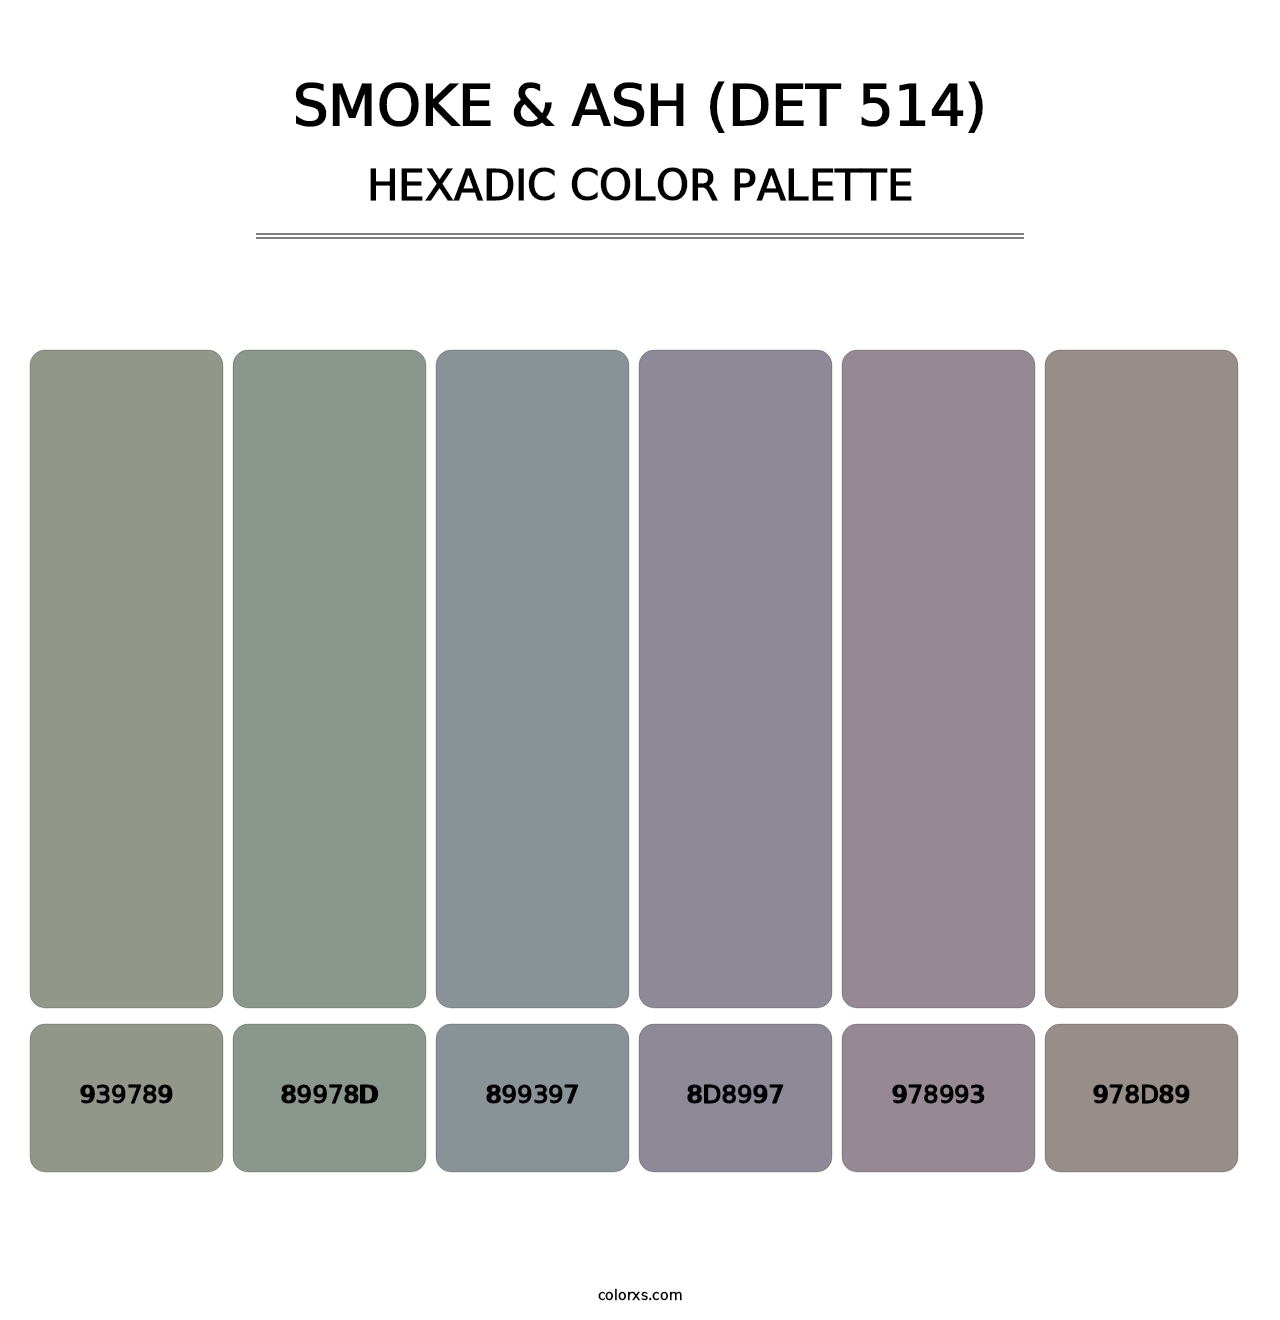 Smoke & Ash (DET 514) - Hexadic Color Palette